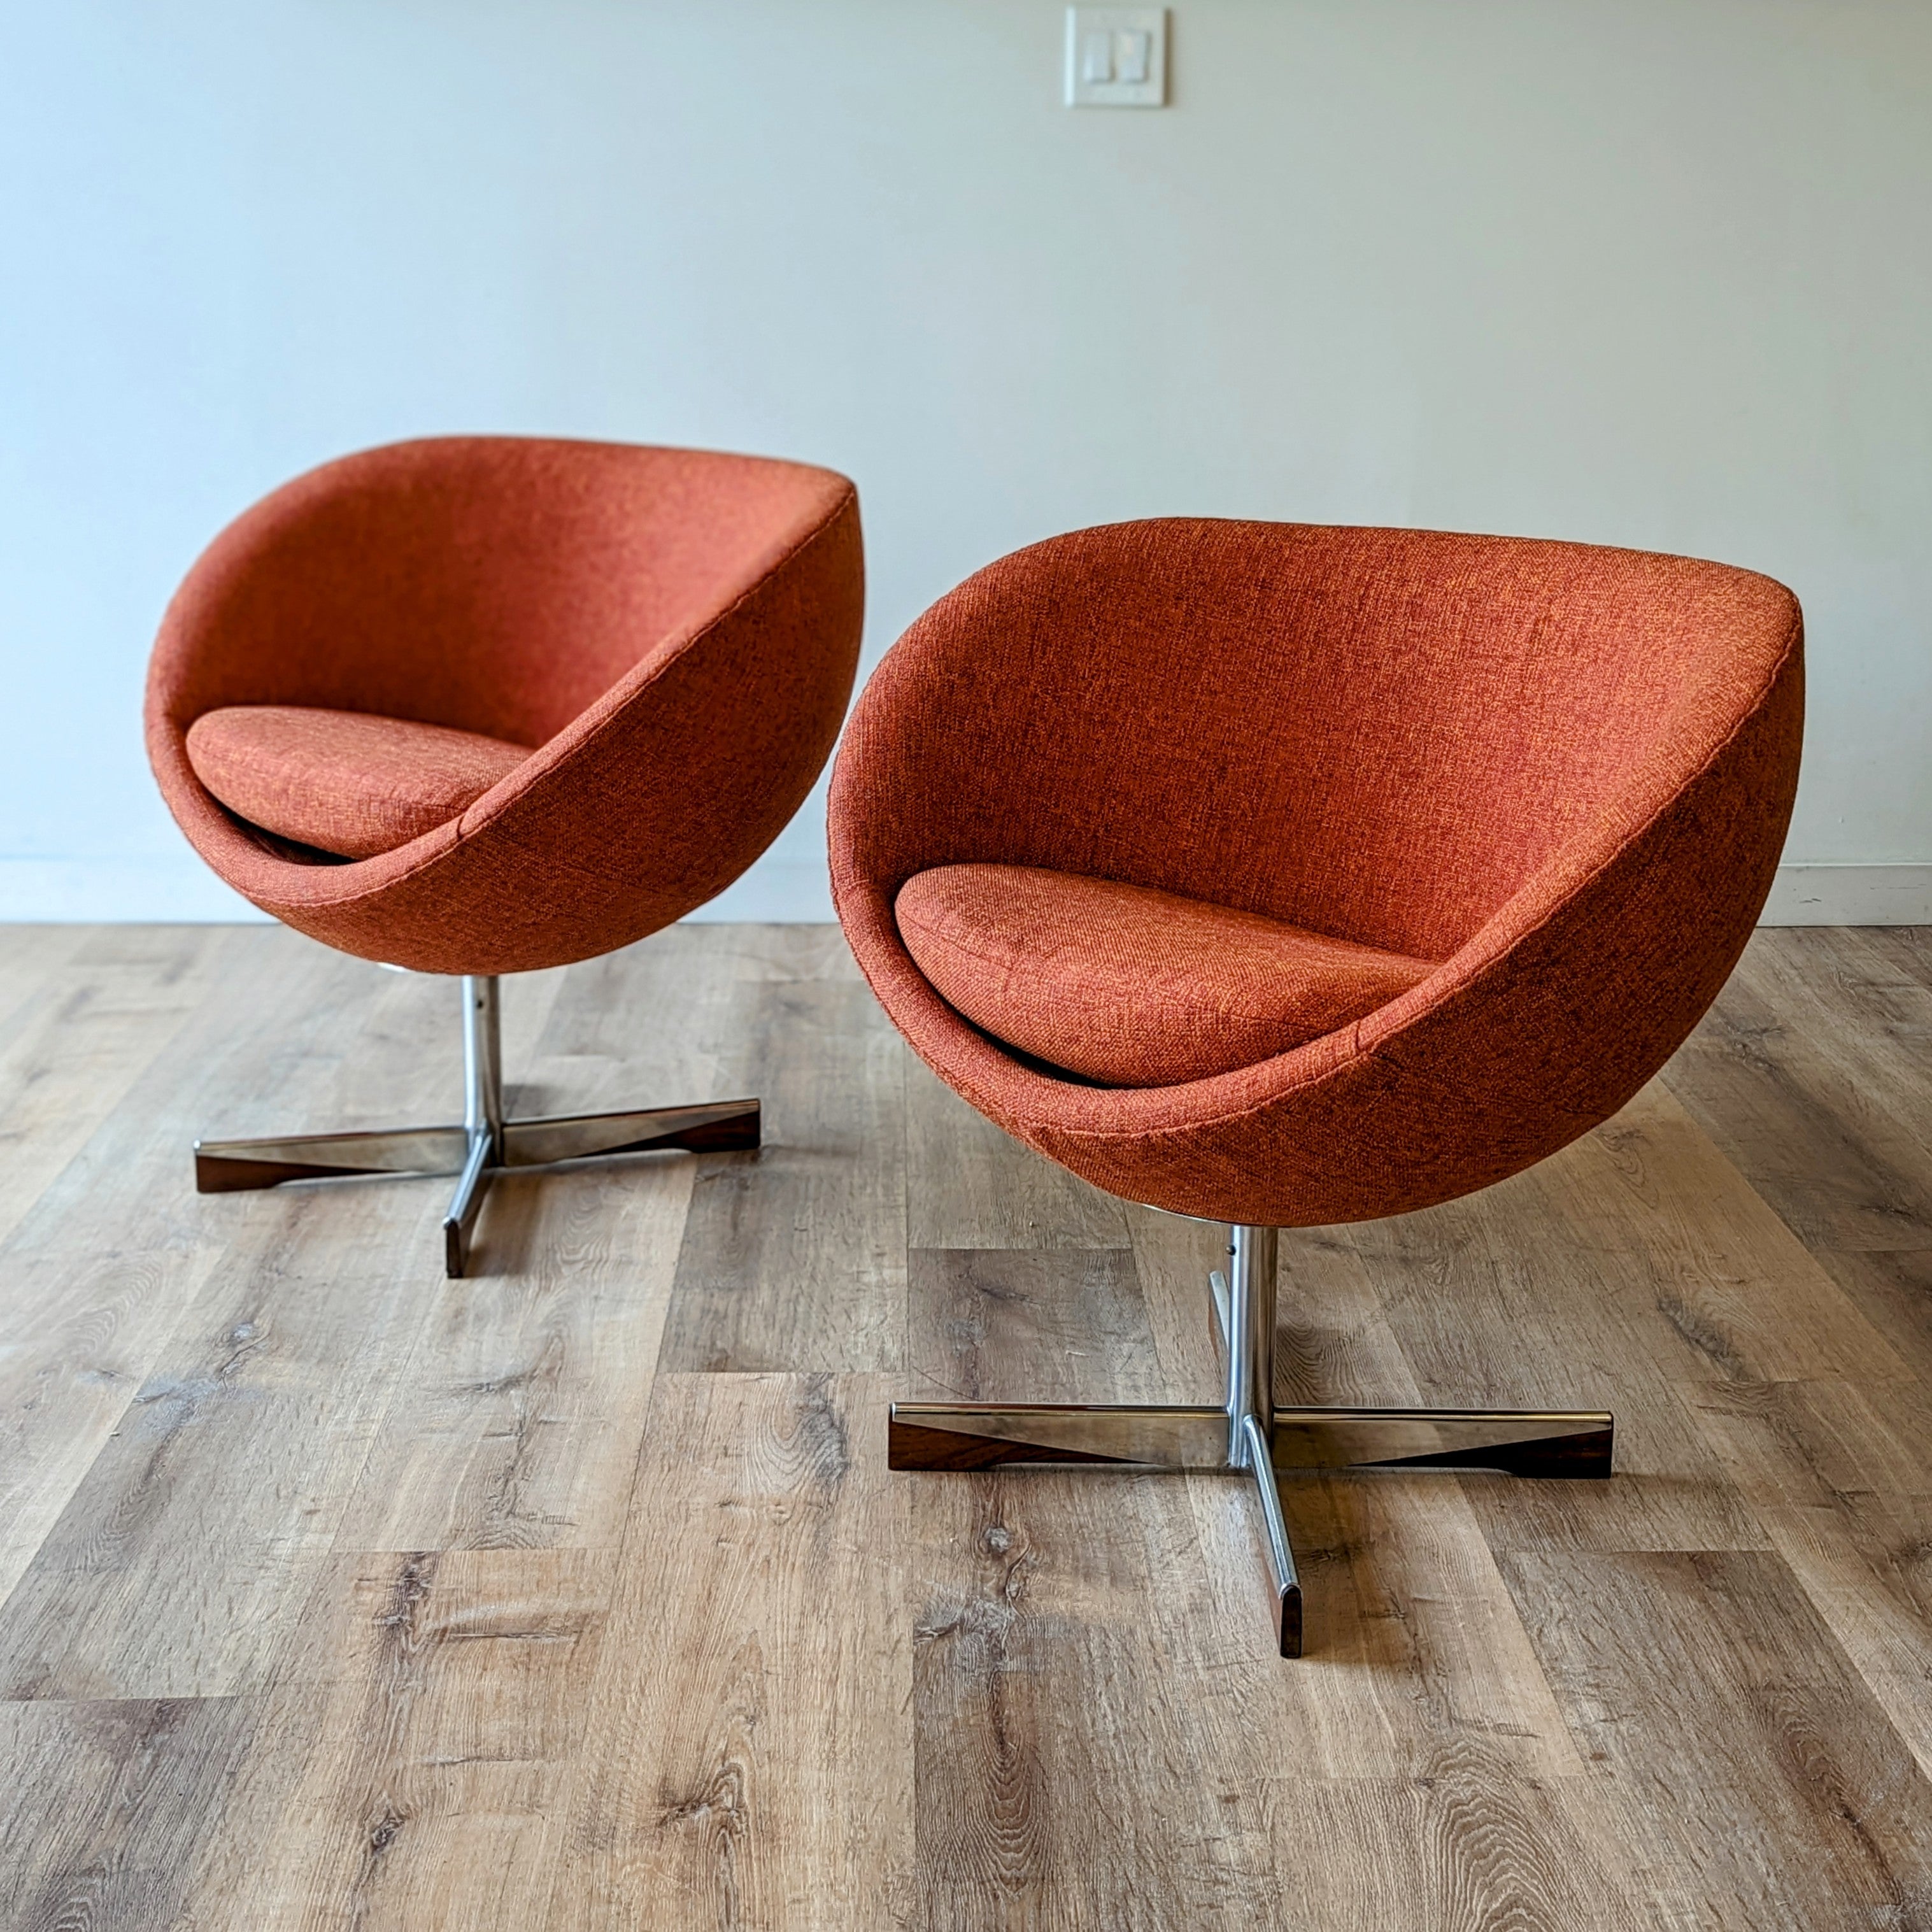 Sven Ivar Dysthe 'Planet Chairs'